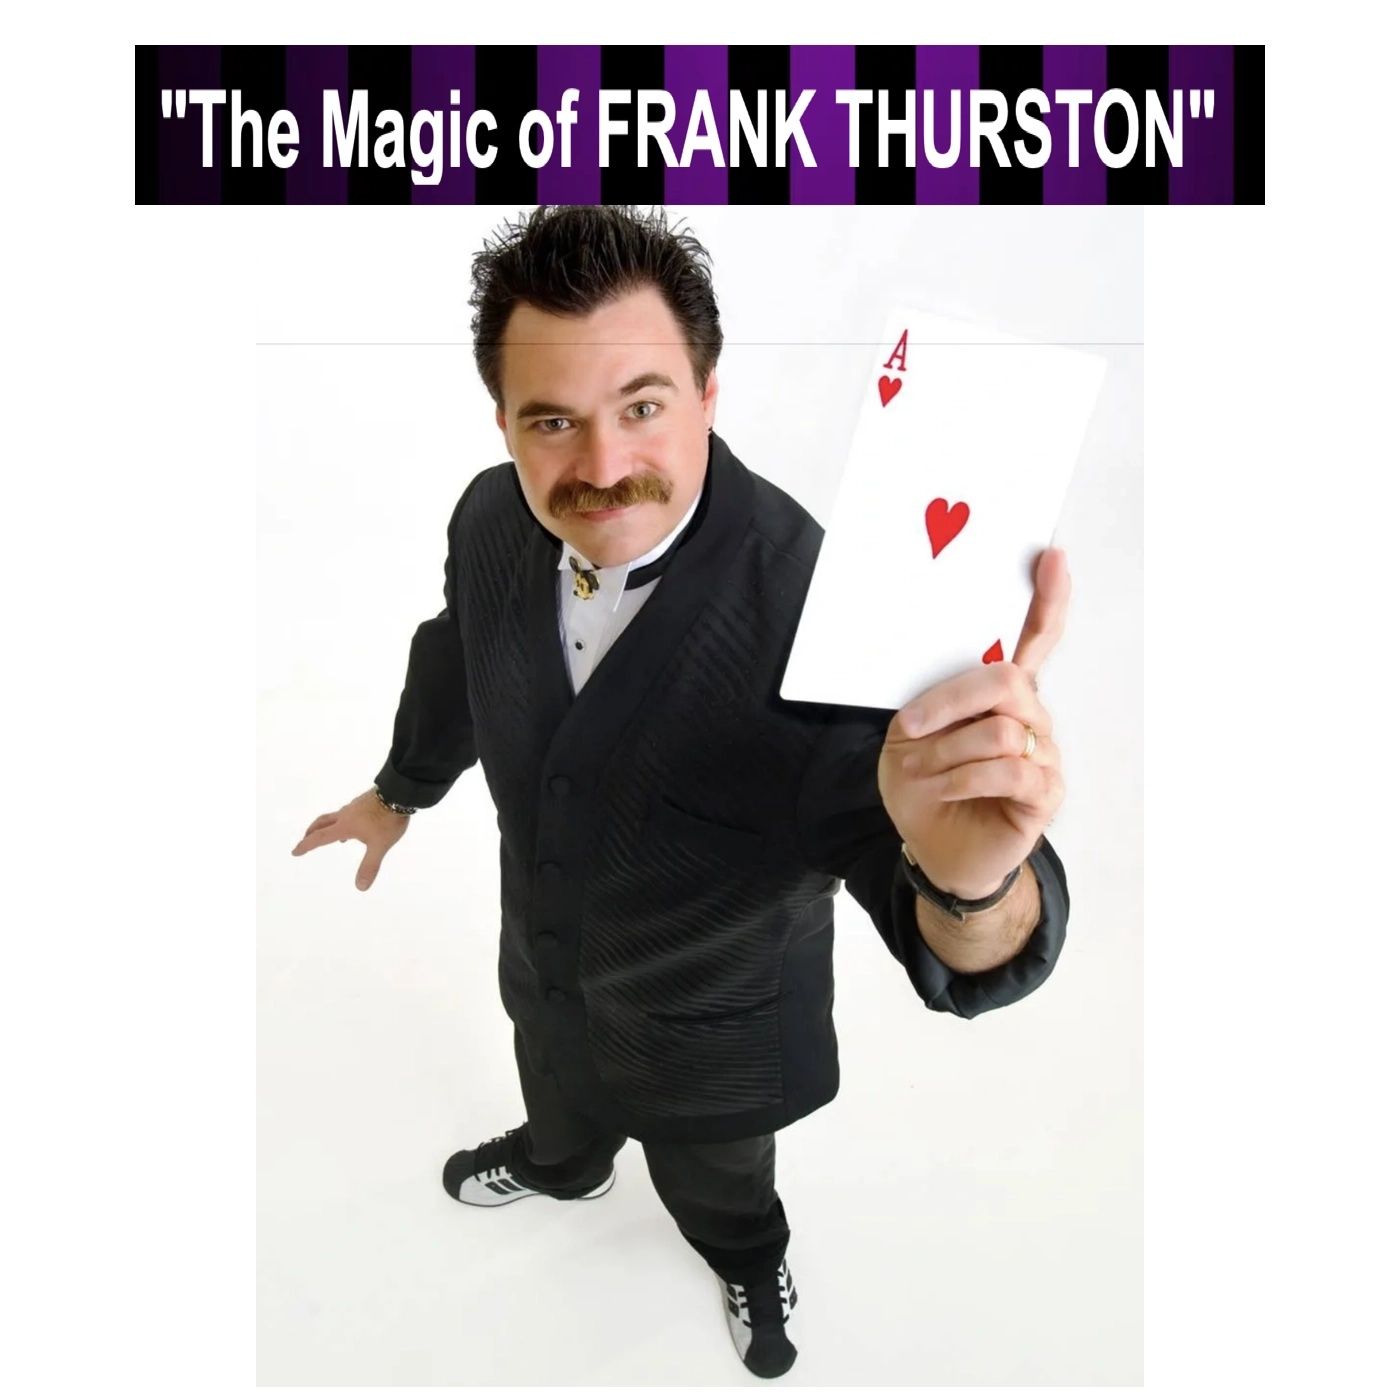 Frank Thurston - Comedic Magician